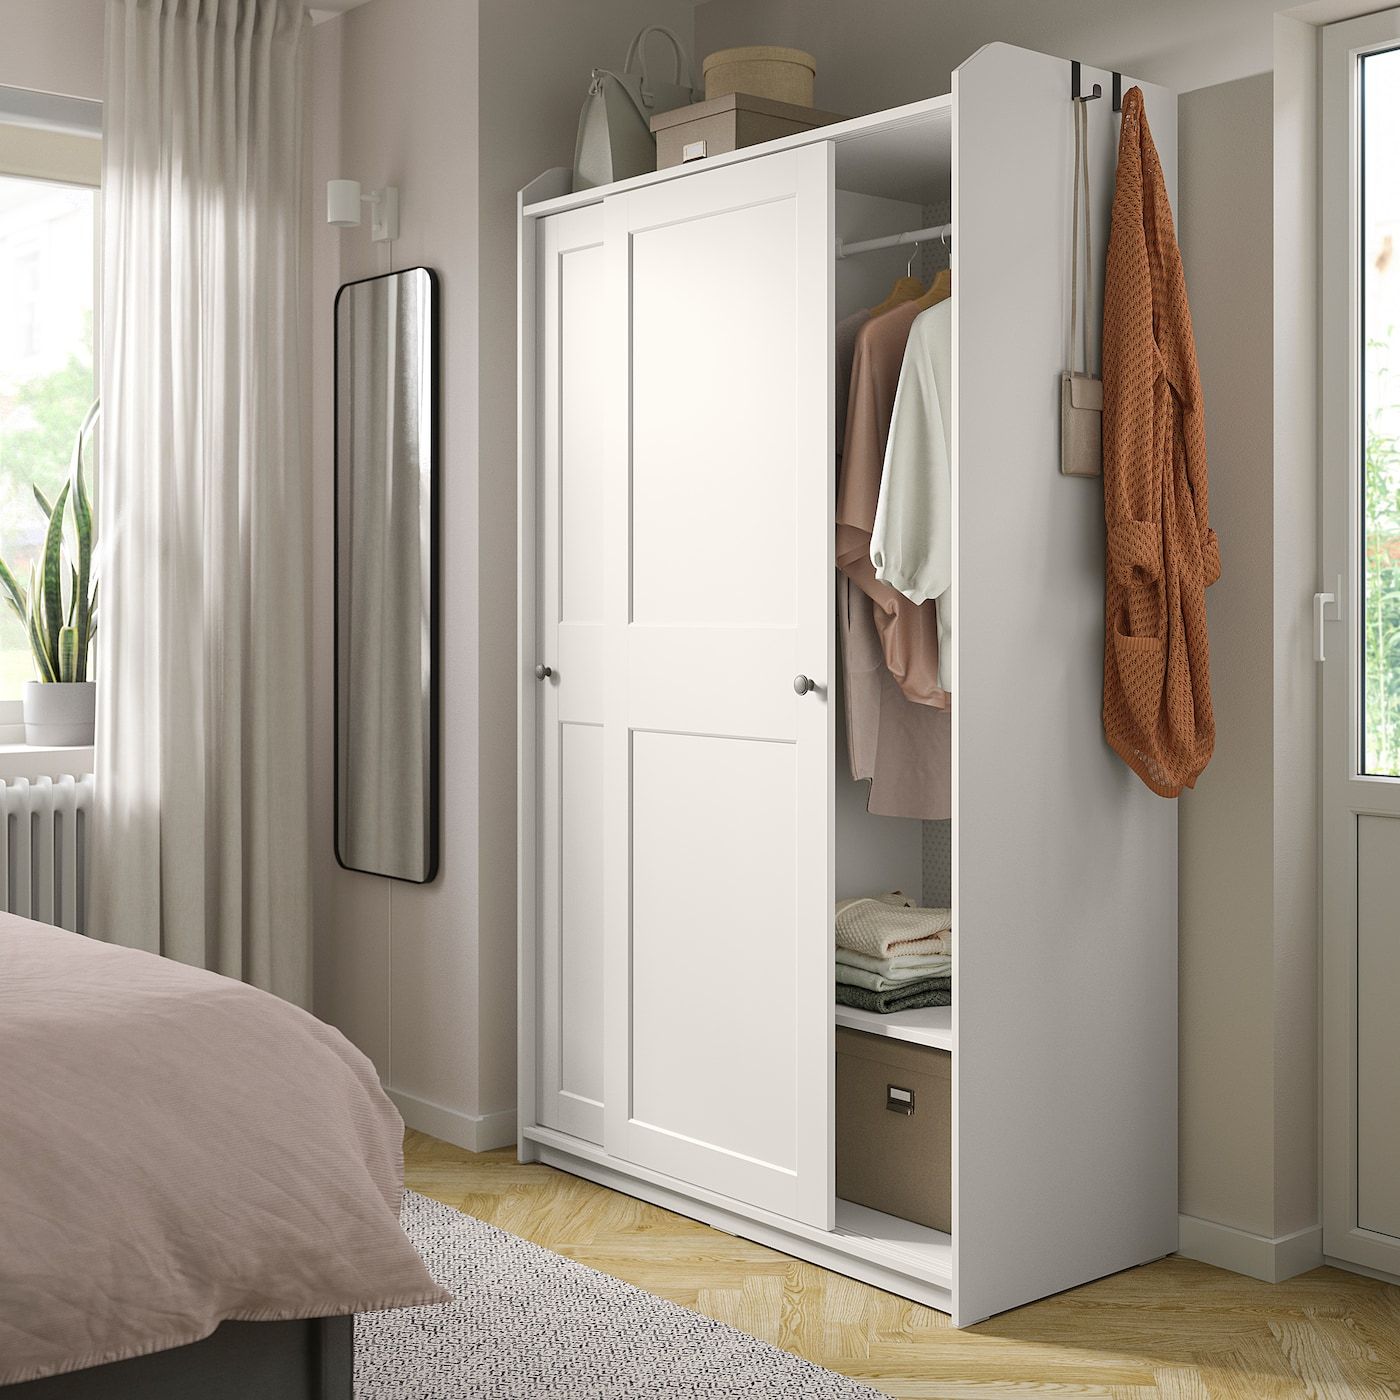 Hauga Wardrobe With Sliding Doors, White, 118x55x199 Cm – Ikea With Sliding Door Wardrobes (View 15 of 15)